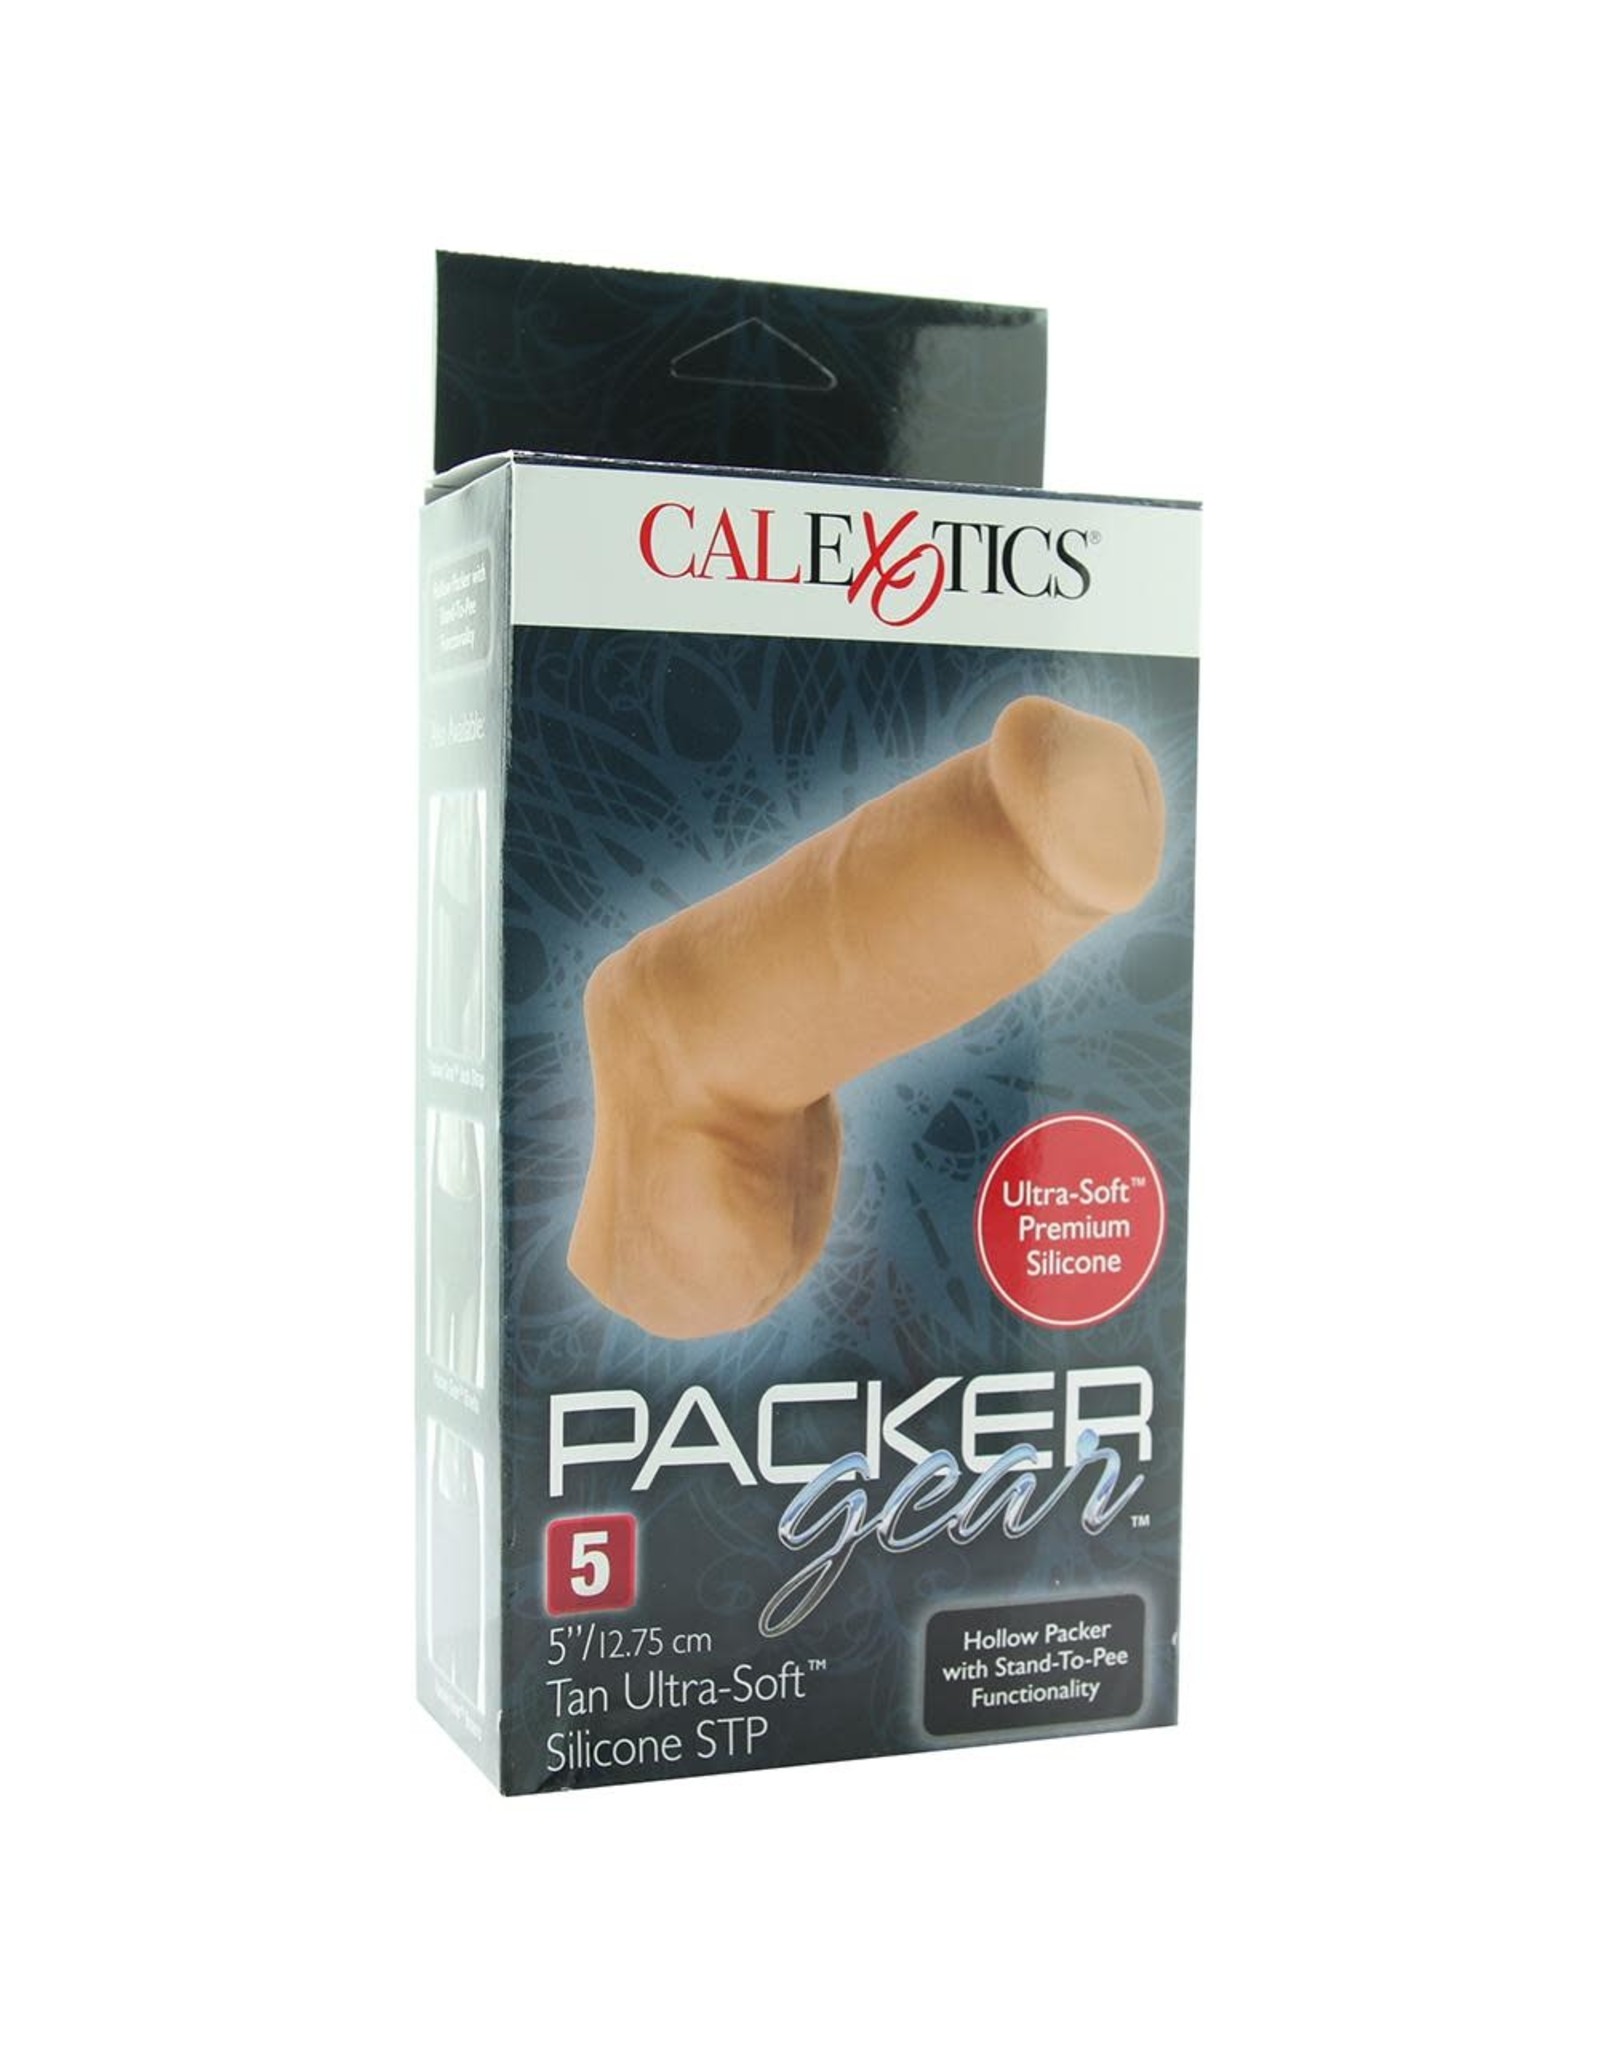 Calexotics Calexotics - Hollow Stand to Pee 5" Packer - Tan